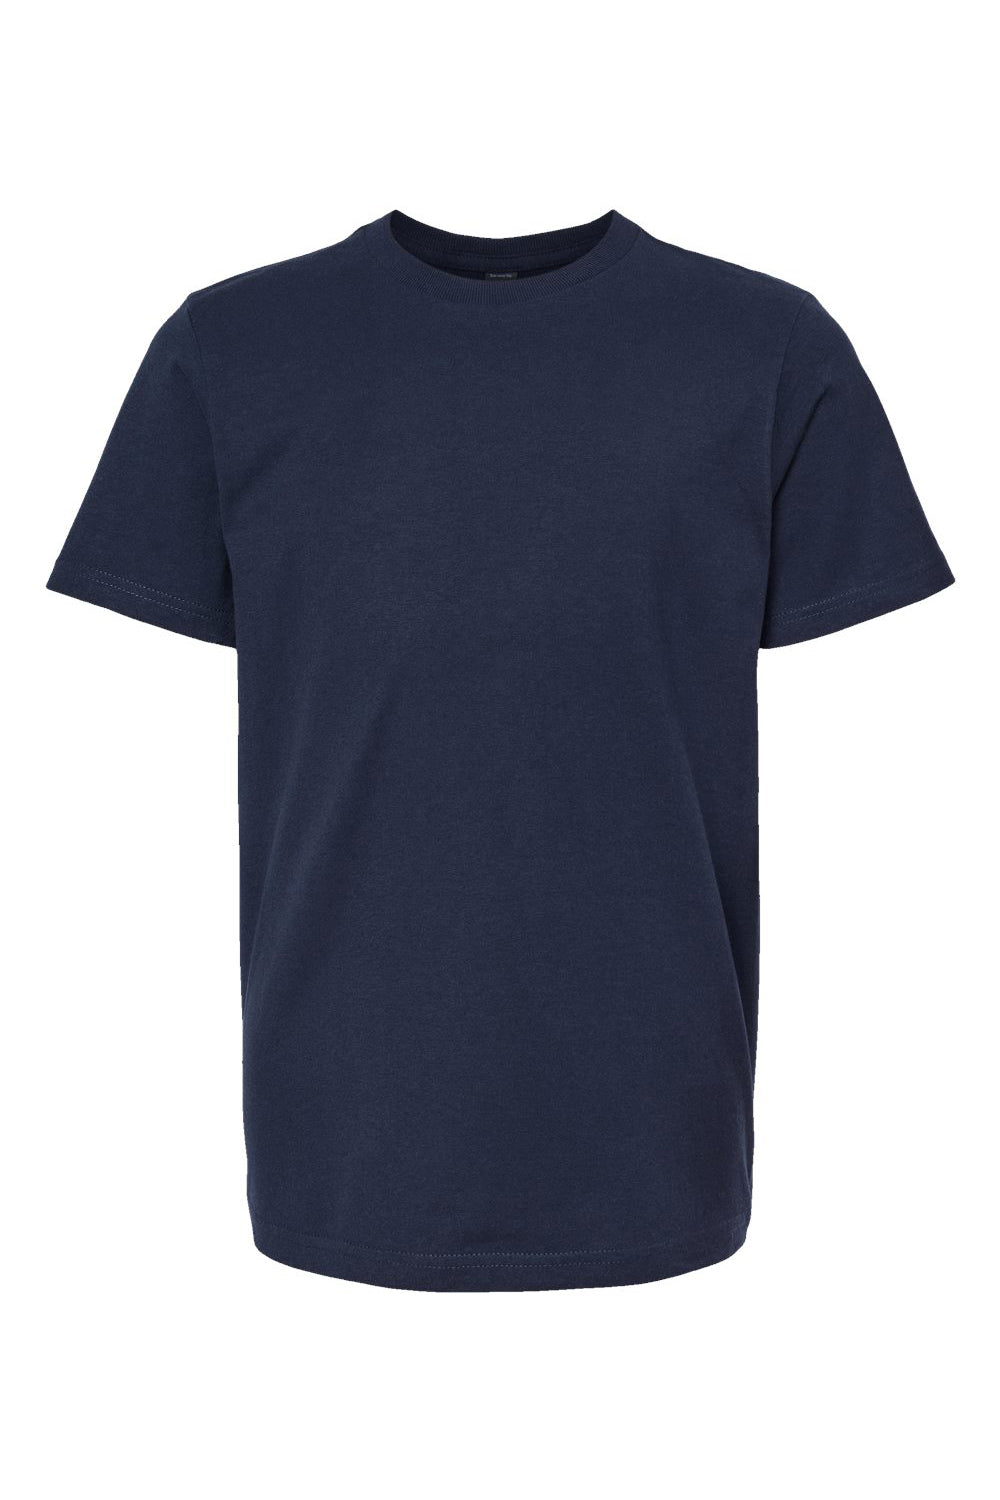 Tultex 295 Youth Jersey Short Sleeve Crewneck T-Shirt Navy Blue Flat Front